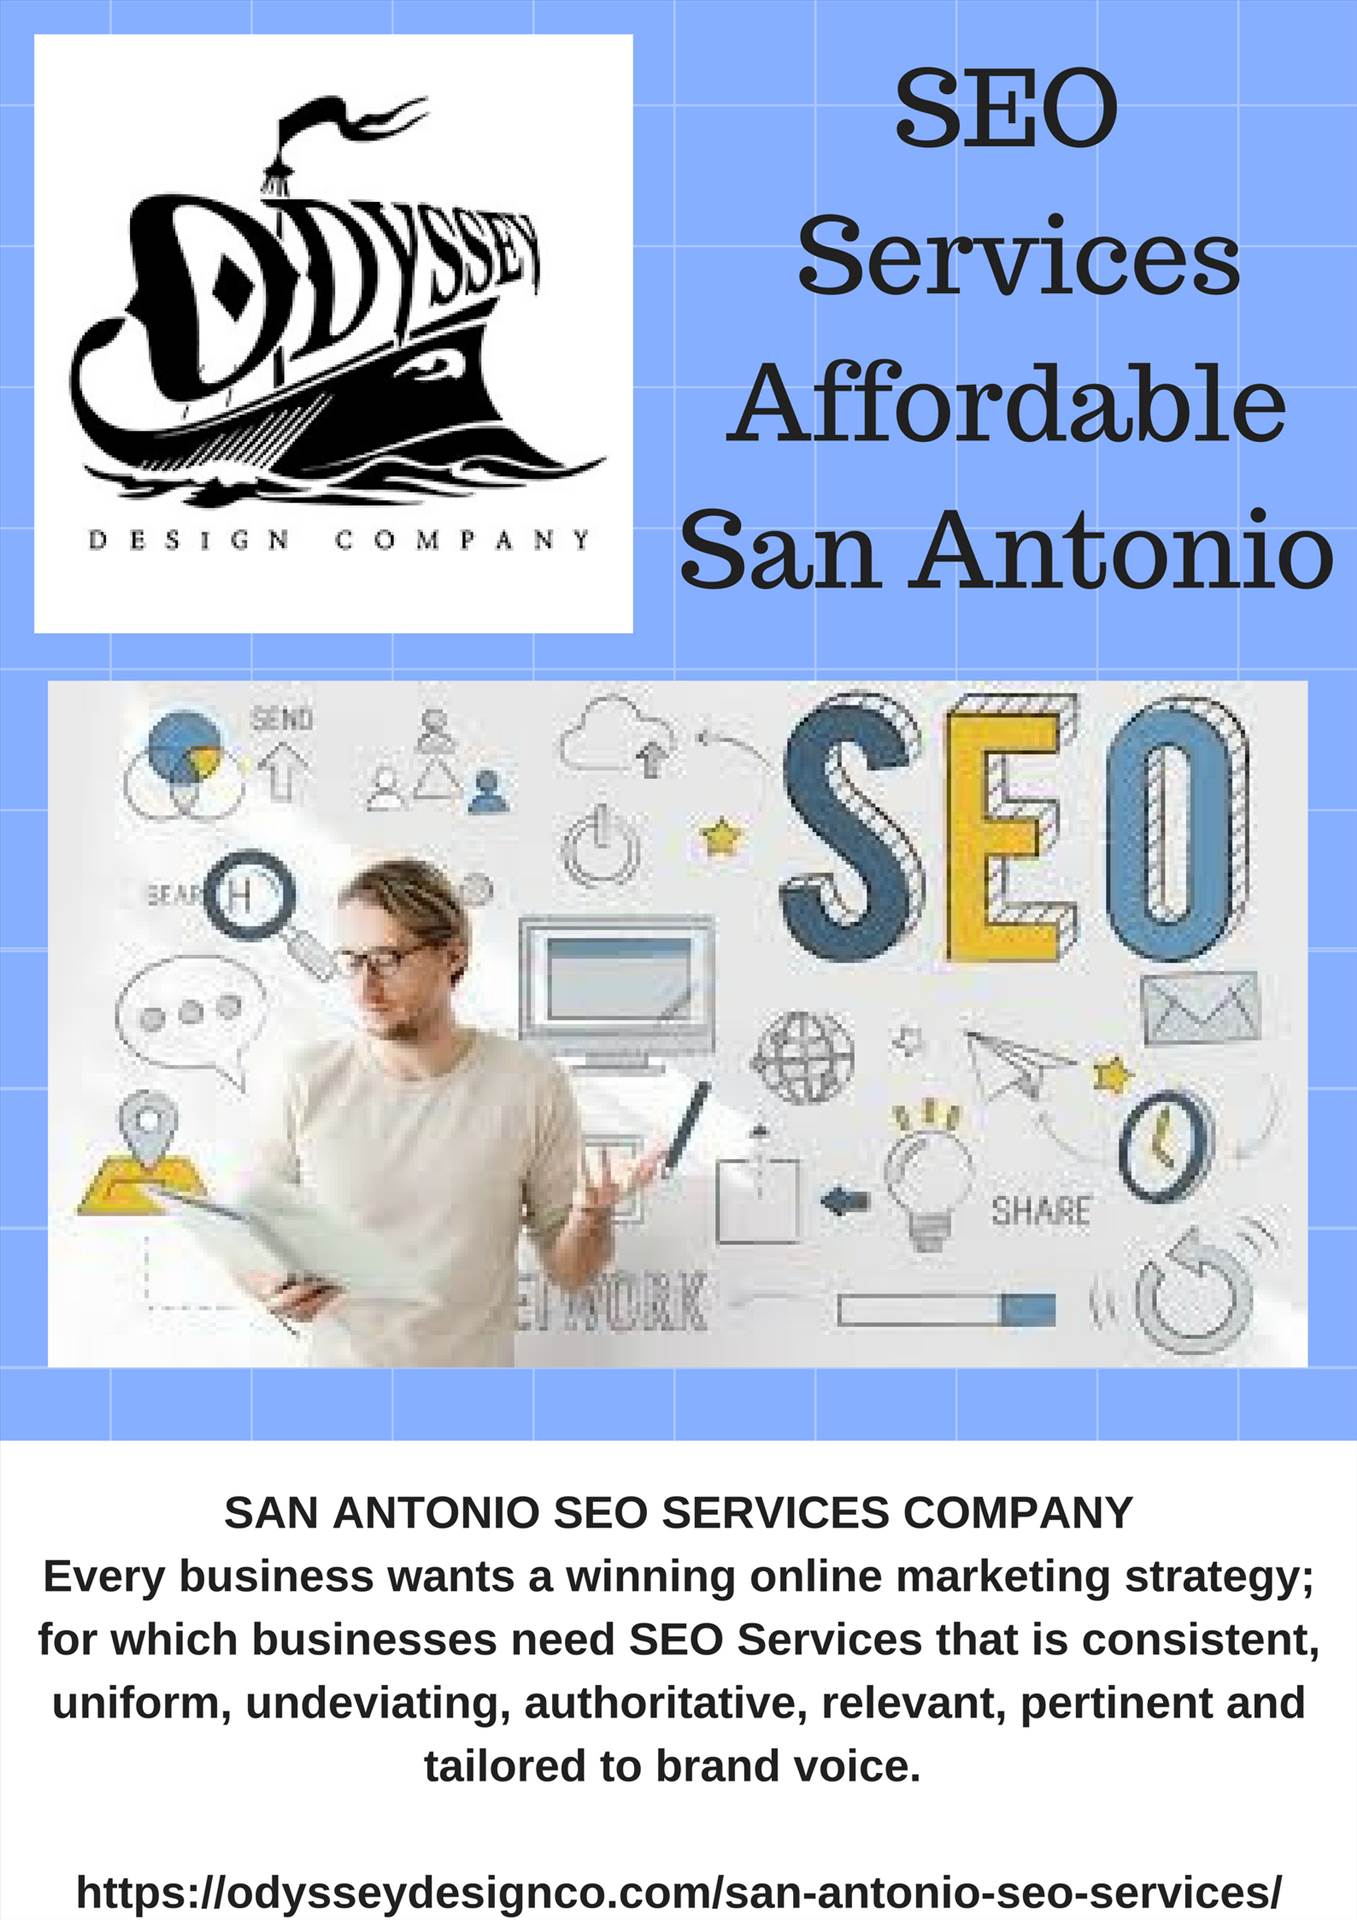 SEO Services Affordable San Antonio.jpg  by odysseydesign